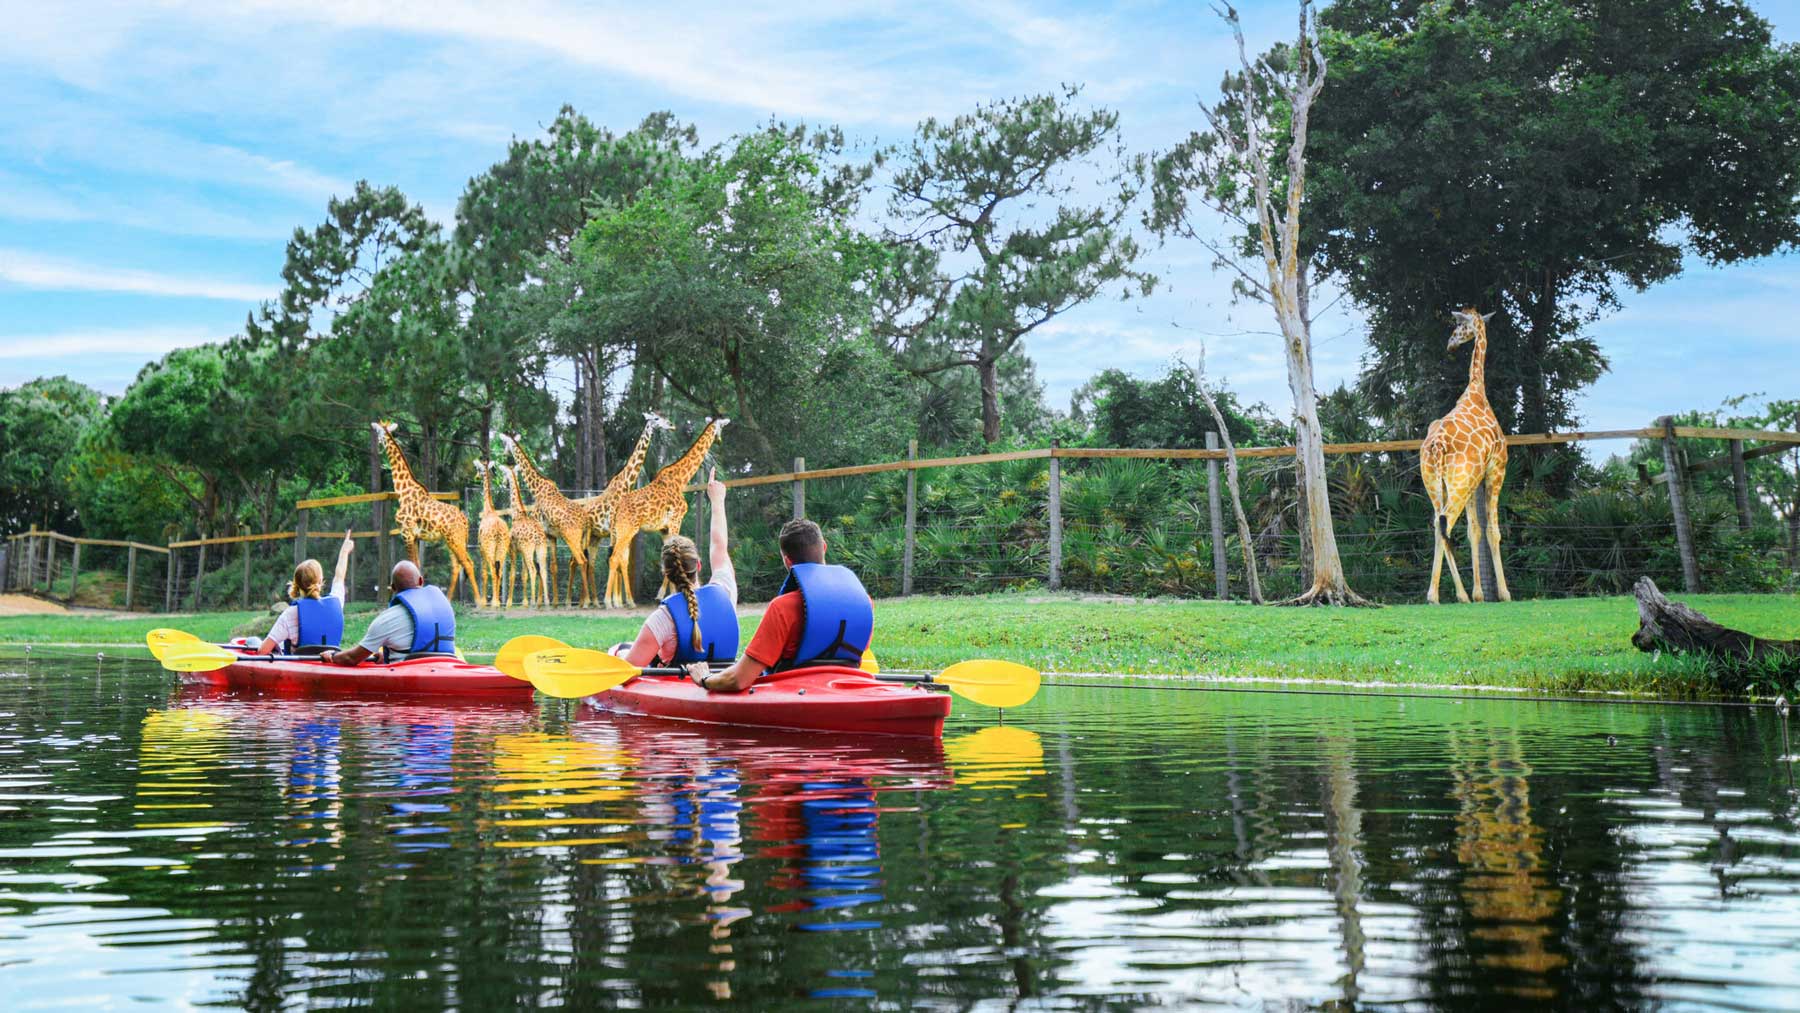 Zoo visitors in a kayak